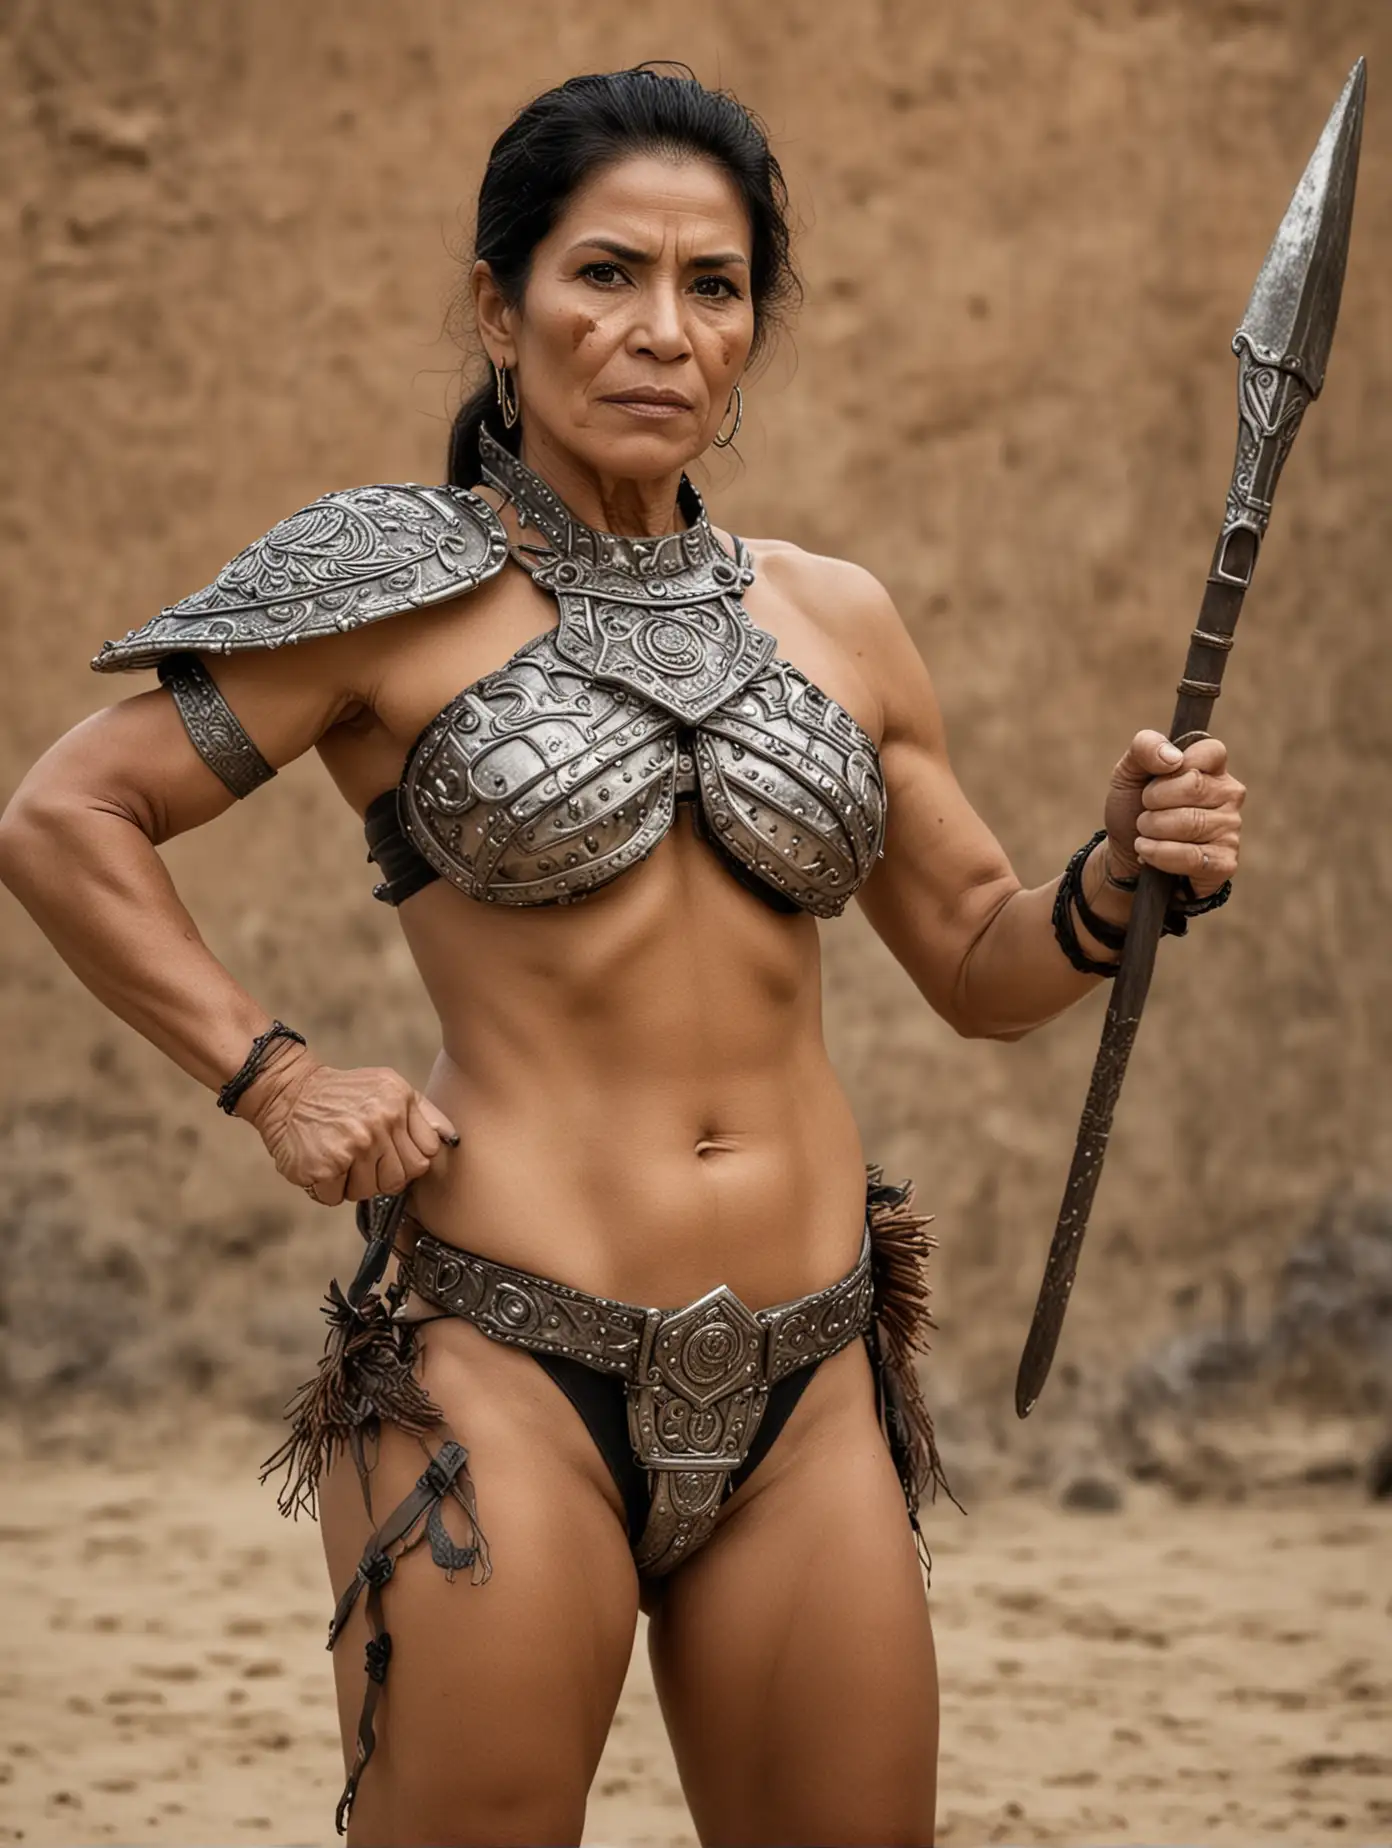 60 year old Mexican woman, wearing bikini armor, muscular, wielding a spear